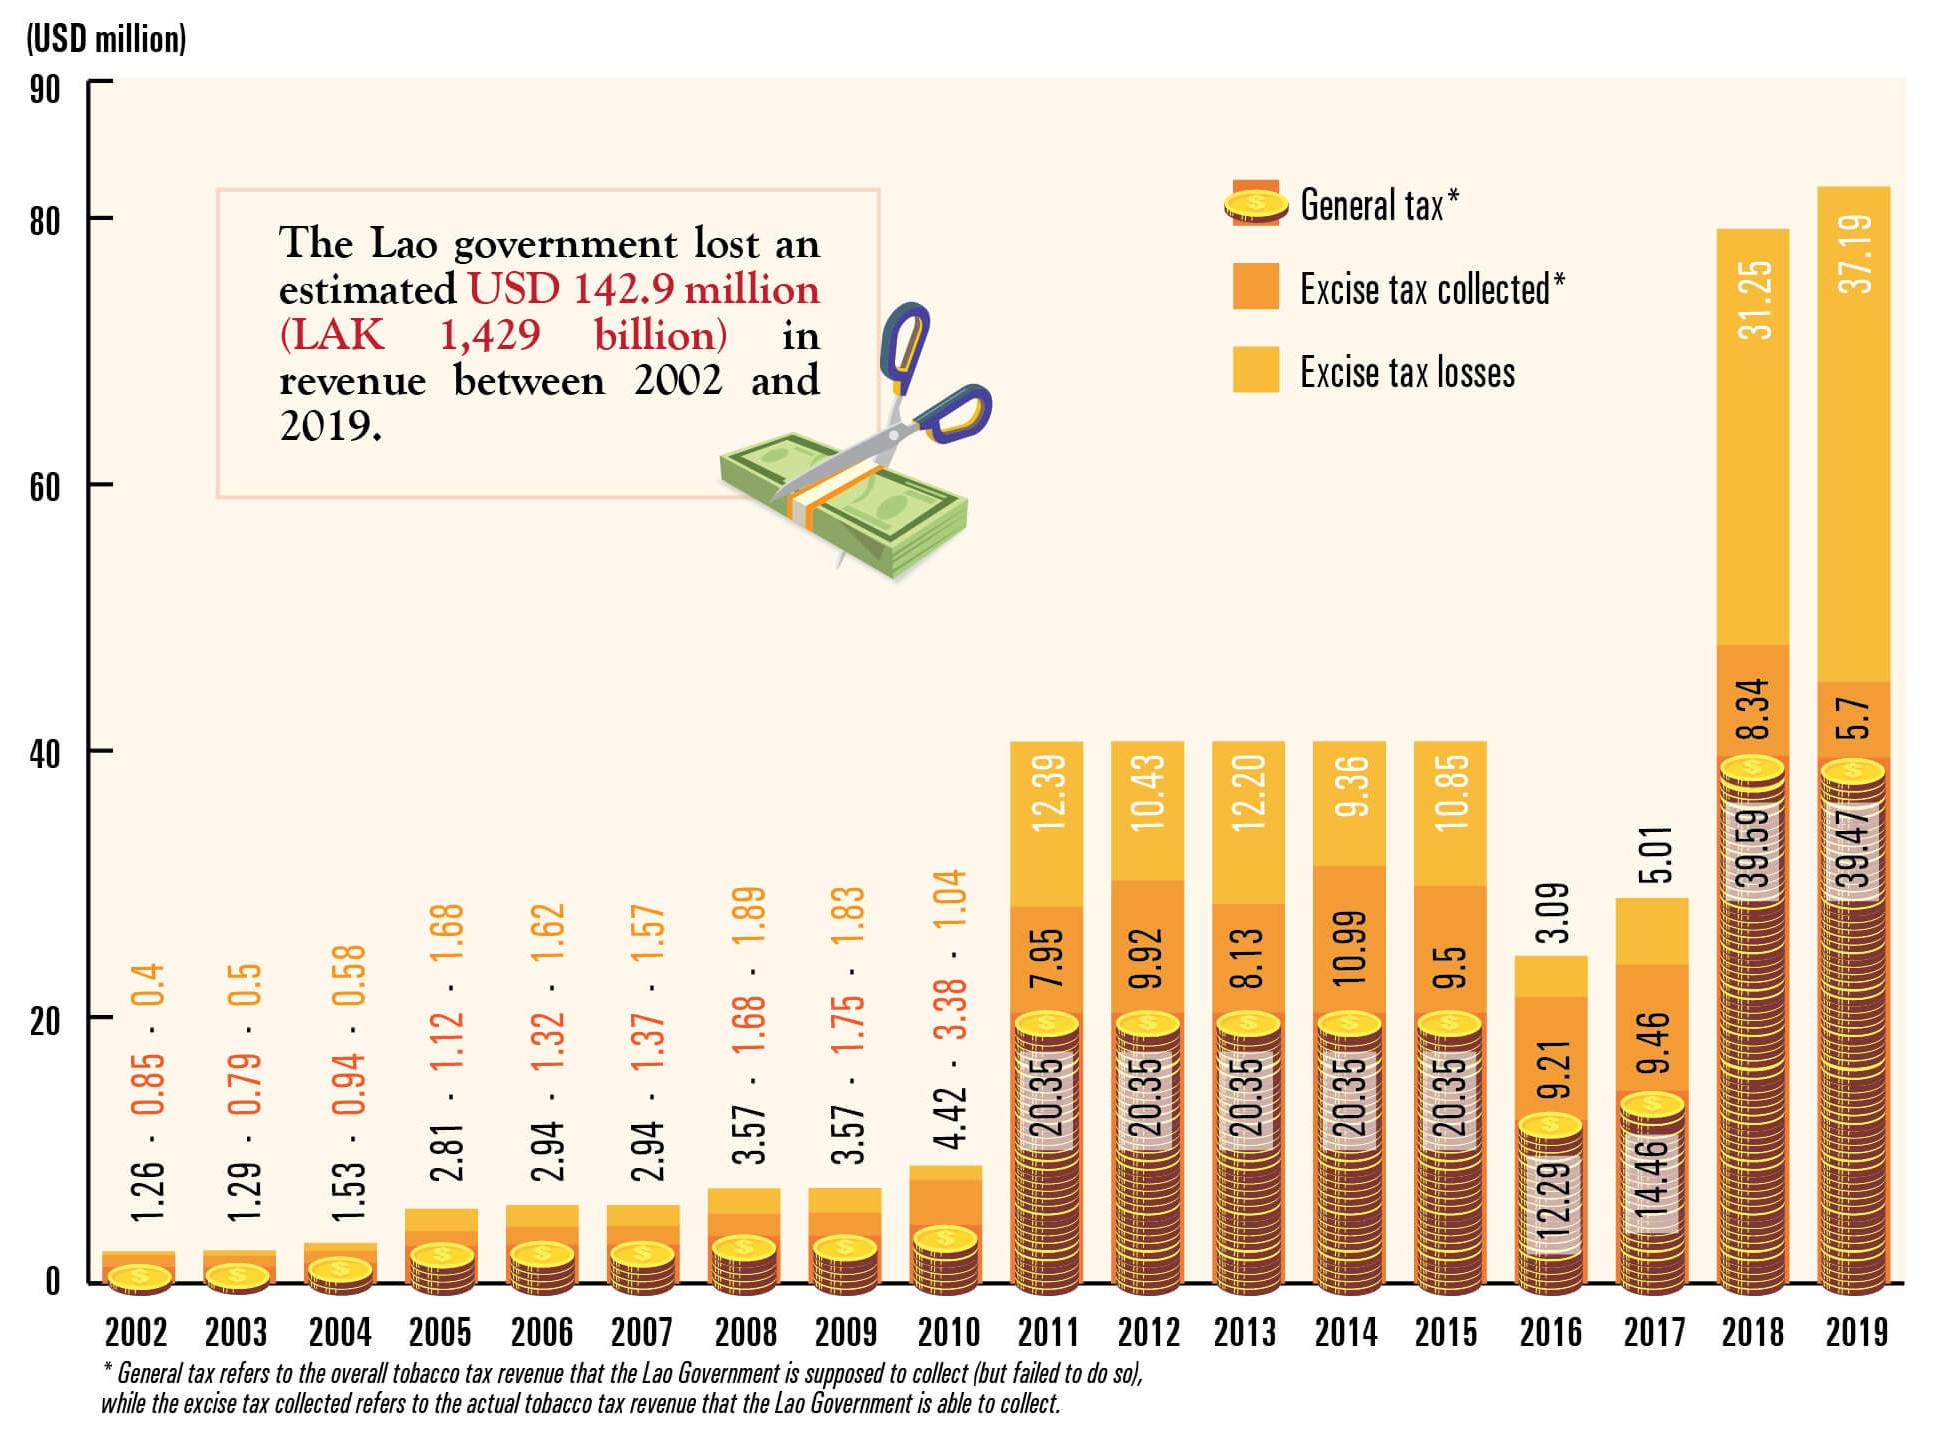 Tobacco tax revenues and revenue losses in Lao PDR (2002 - 2019)